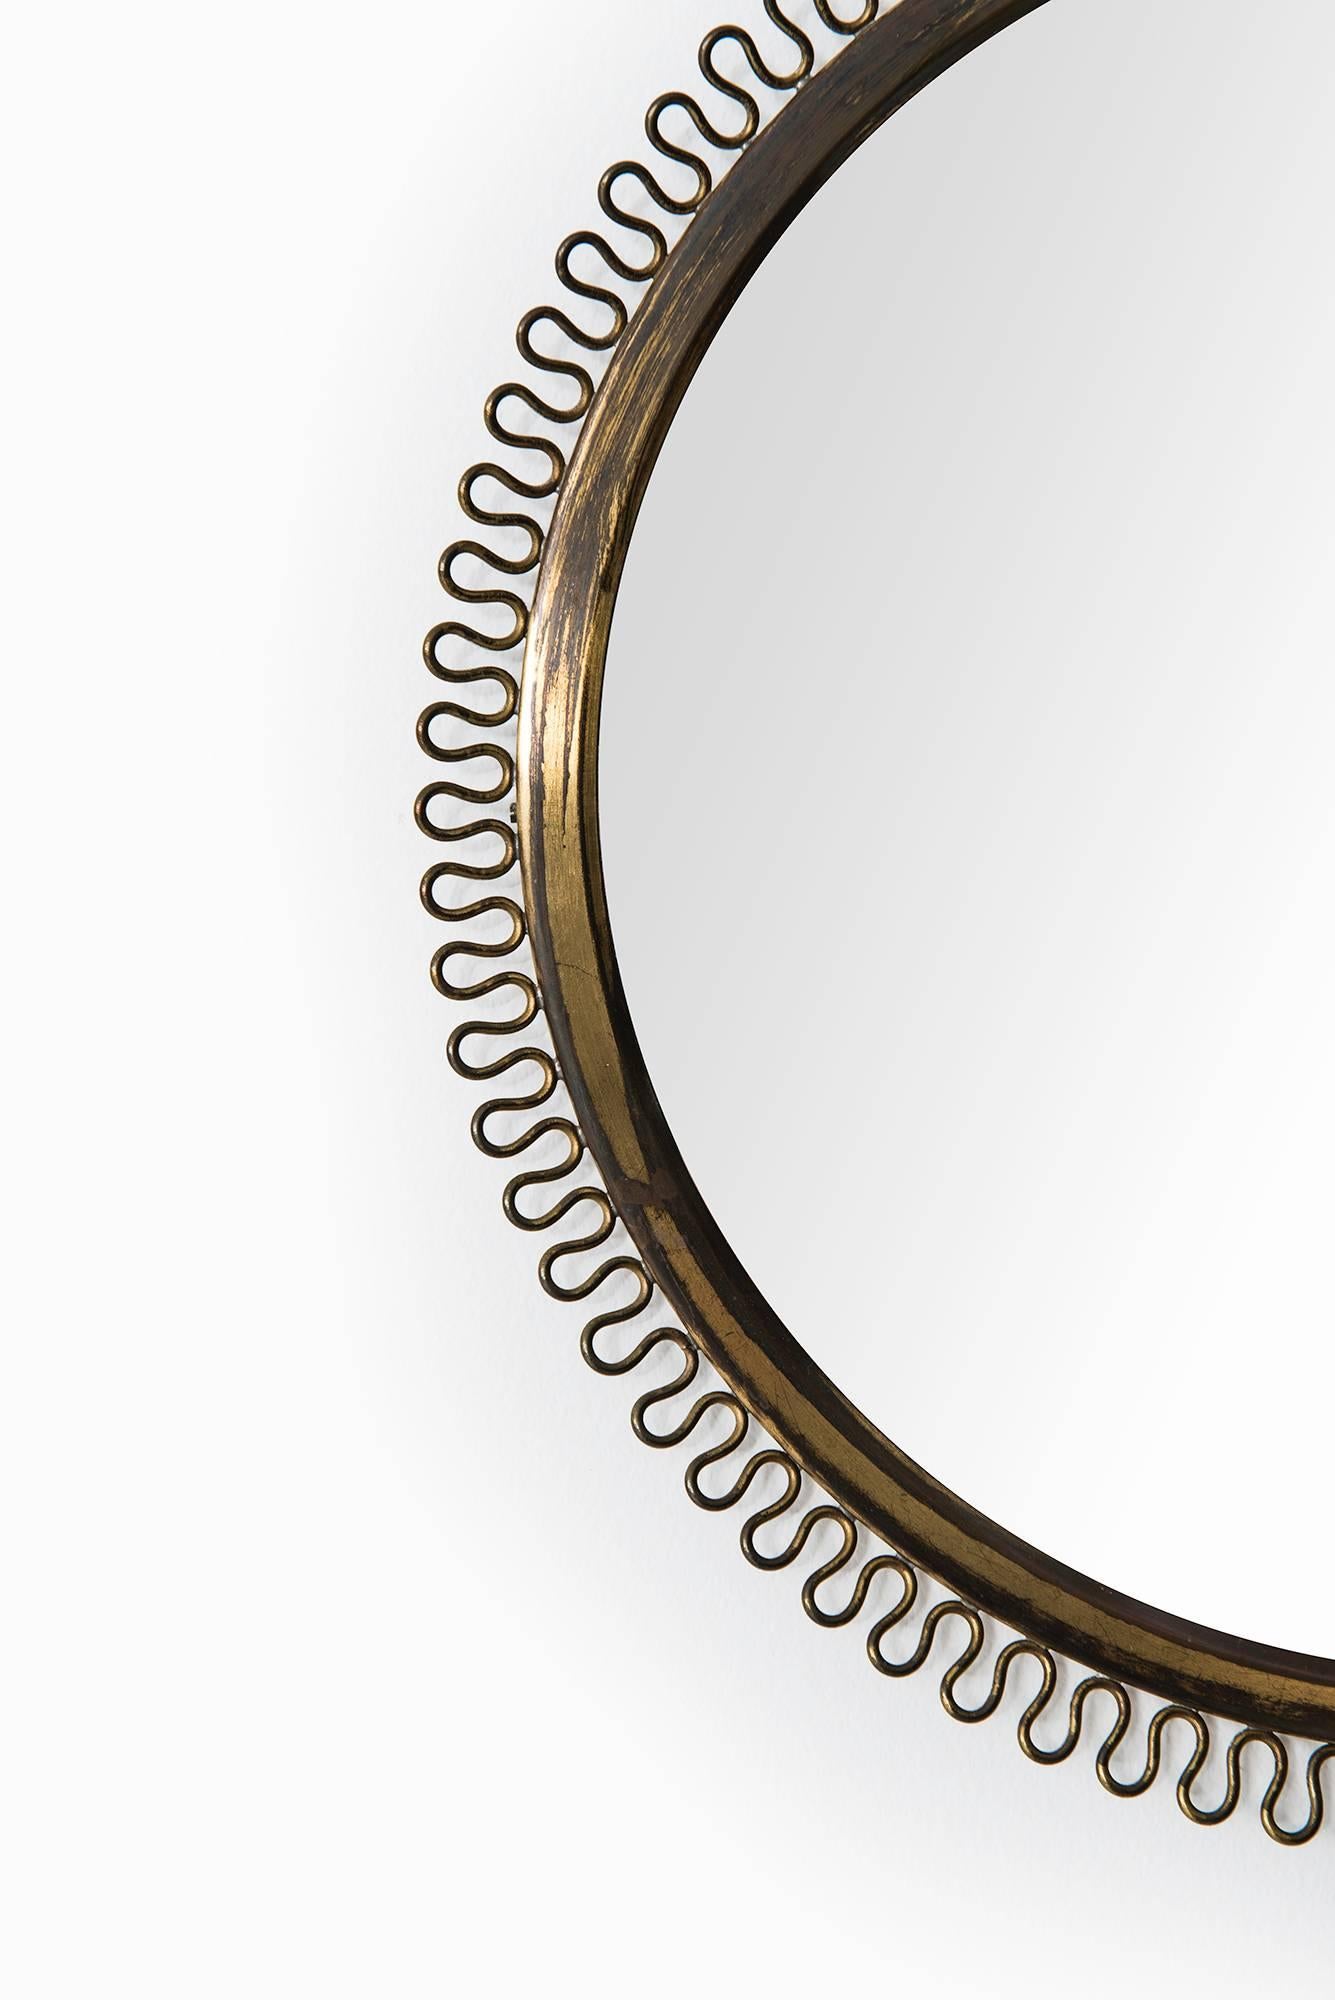 Round mirror in brass designed by Josef Frank. Produced by Svenskt Tenn in Sweden.